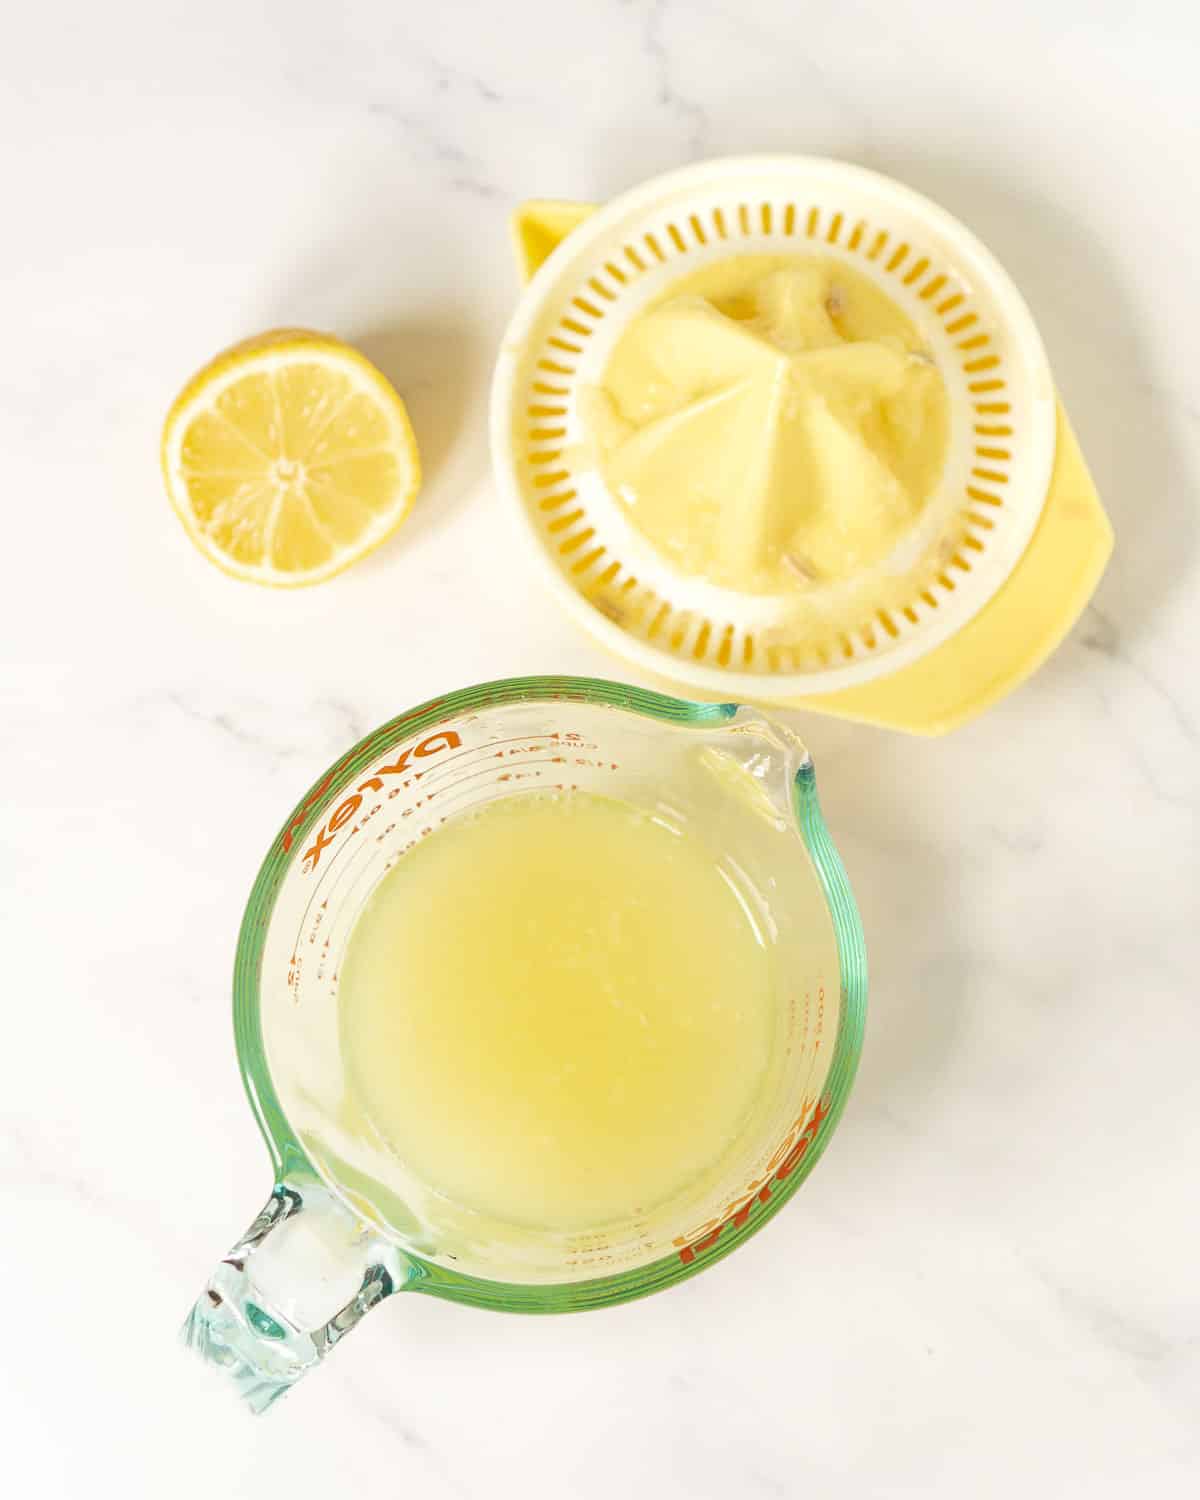 1 cup of fresh squeezed lemon juice